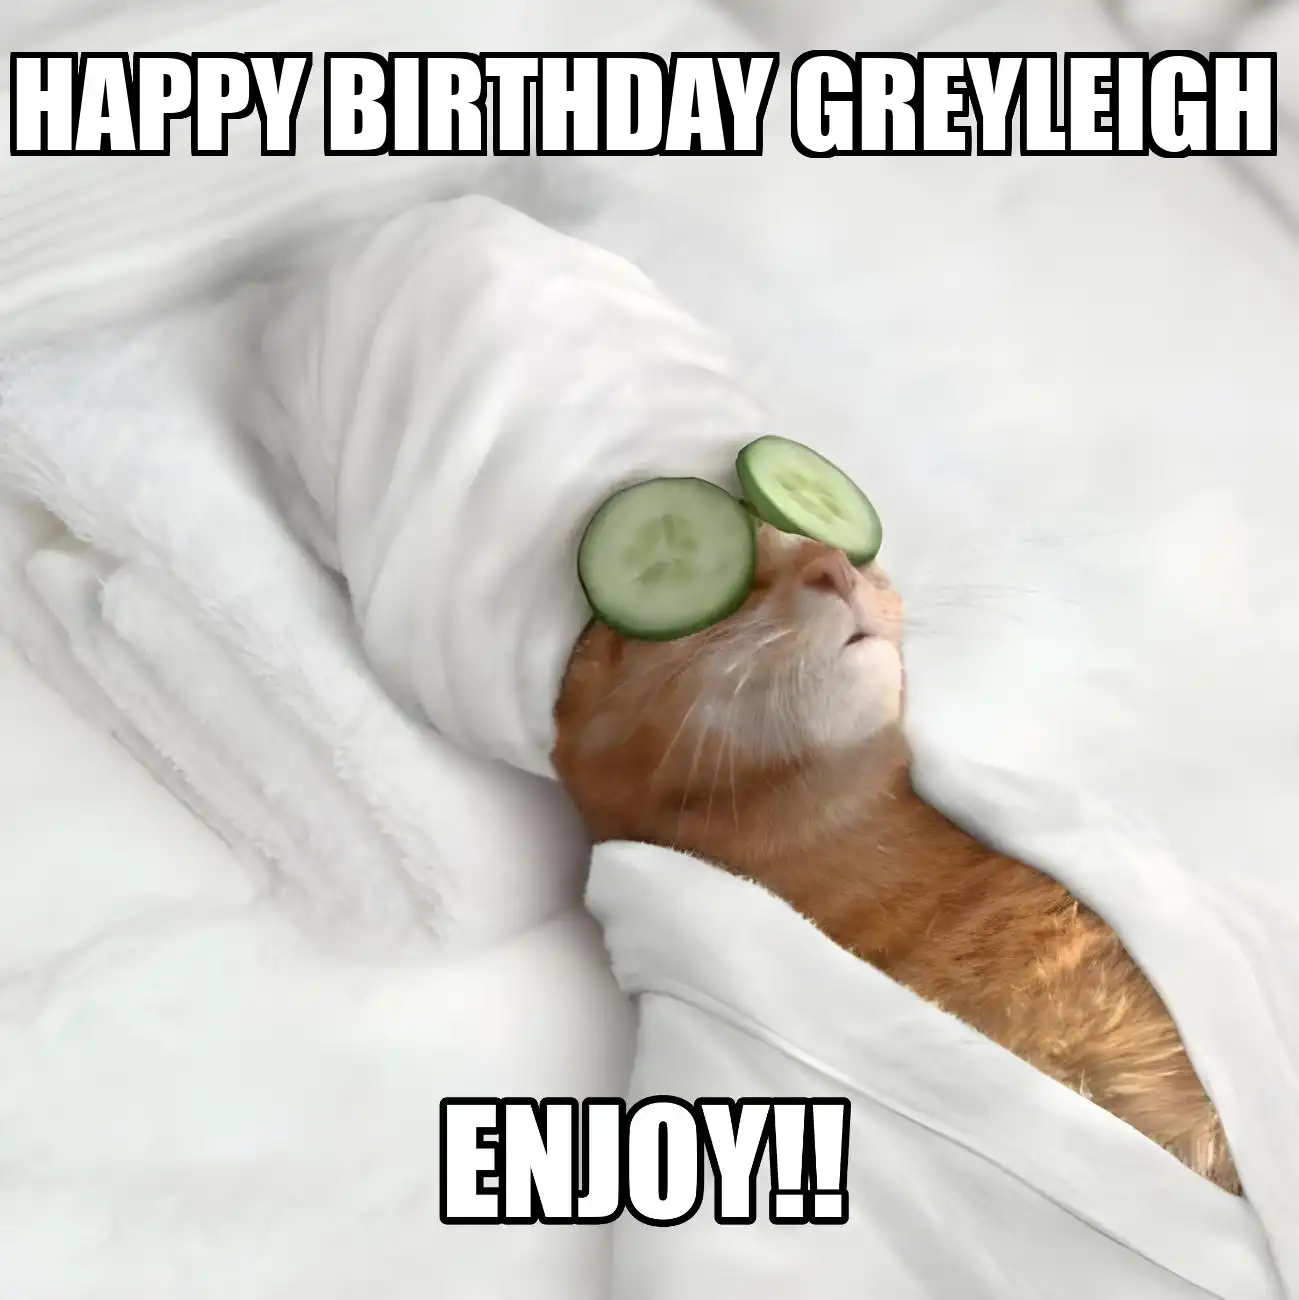 Happy Birthday Greyleigh Enjoy Cat Meme